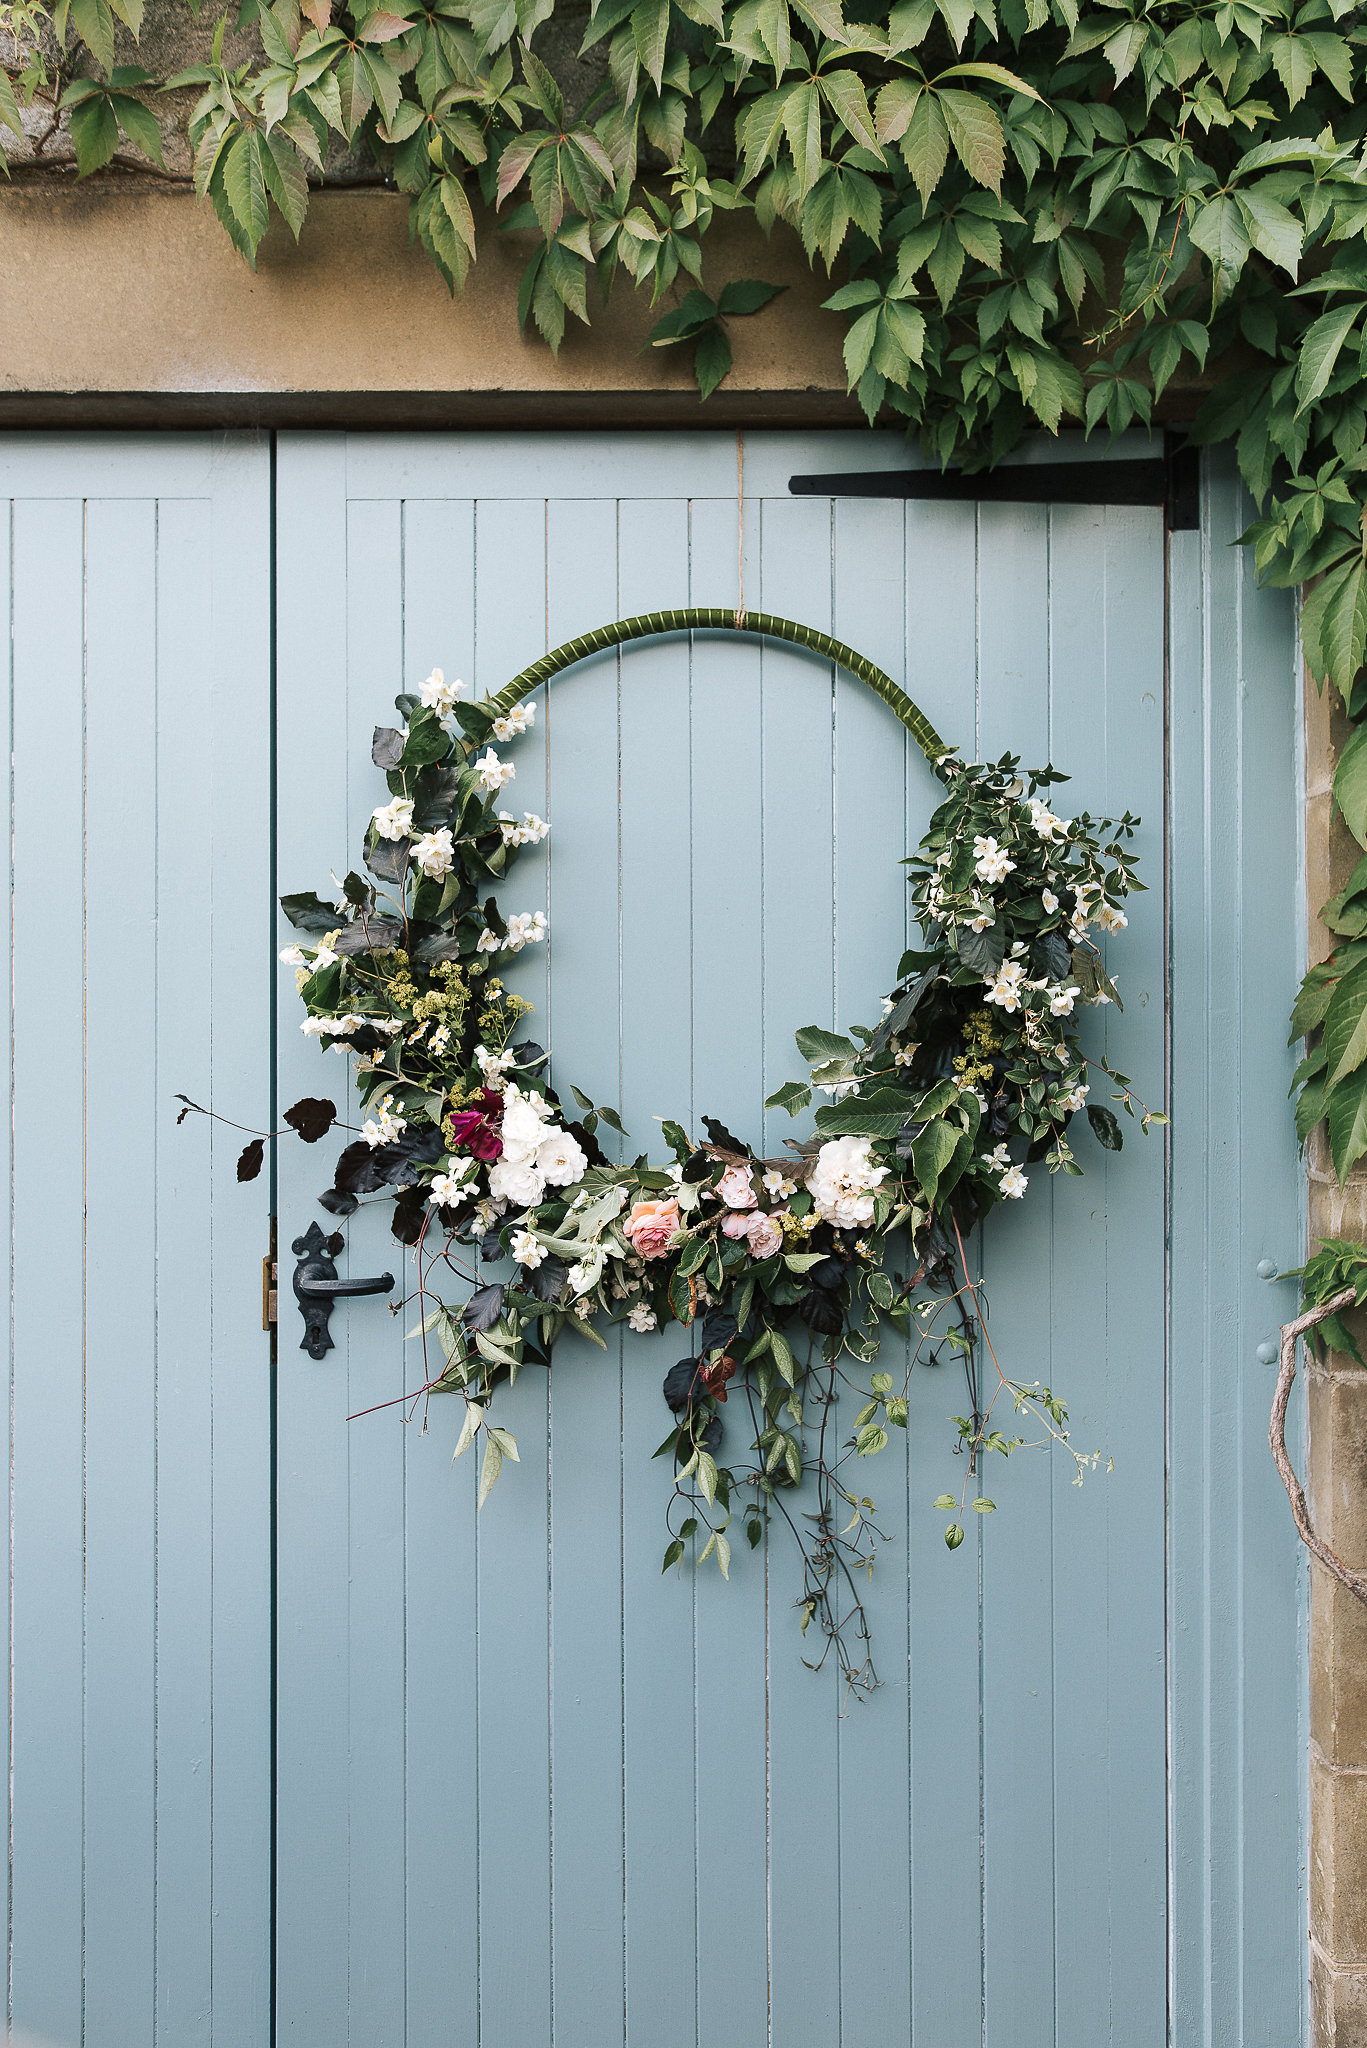 Floral hoop decoration - using British grown flowers